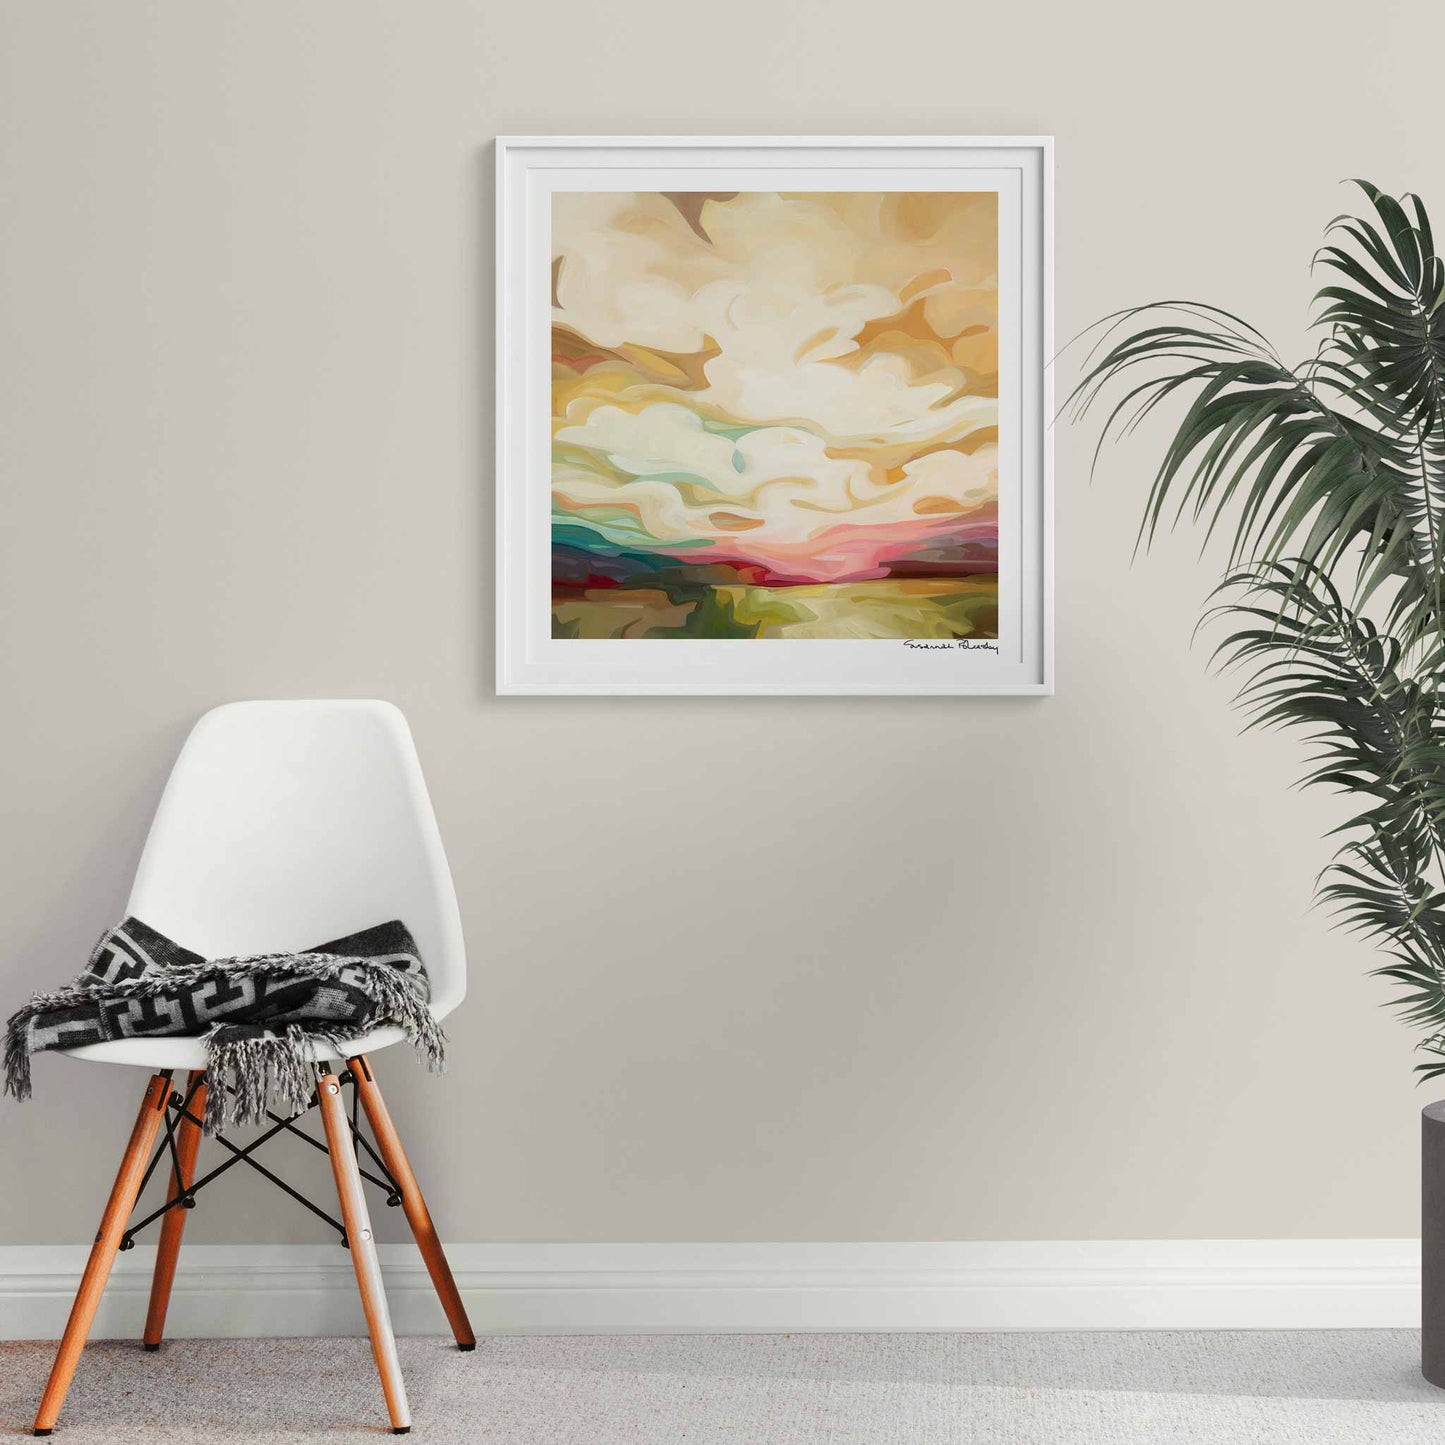 large framed wall art of an acrylic sky painting print by Canadian artist Susannah Bleasby